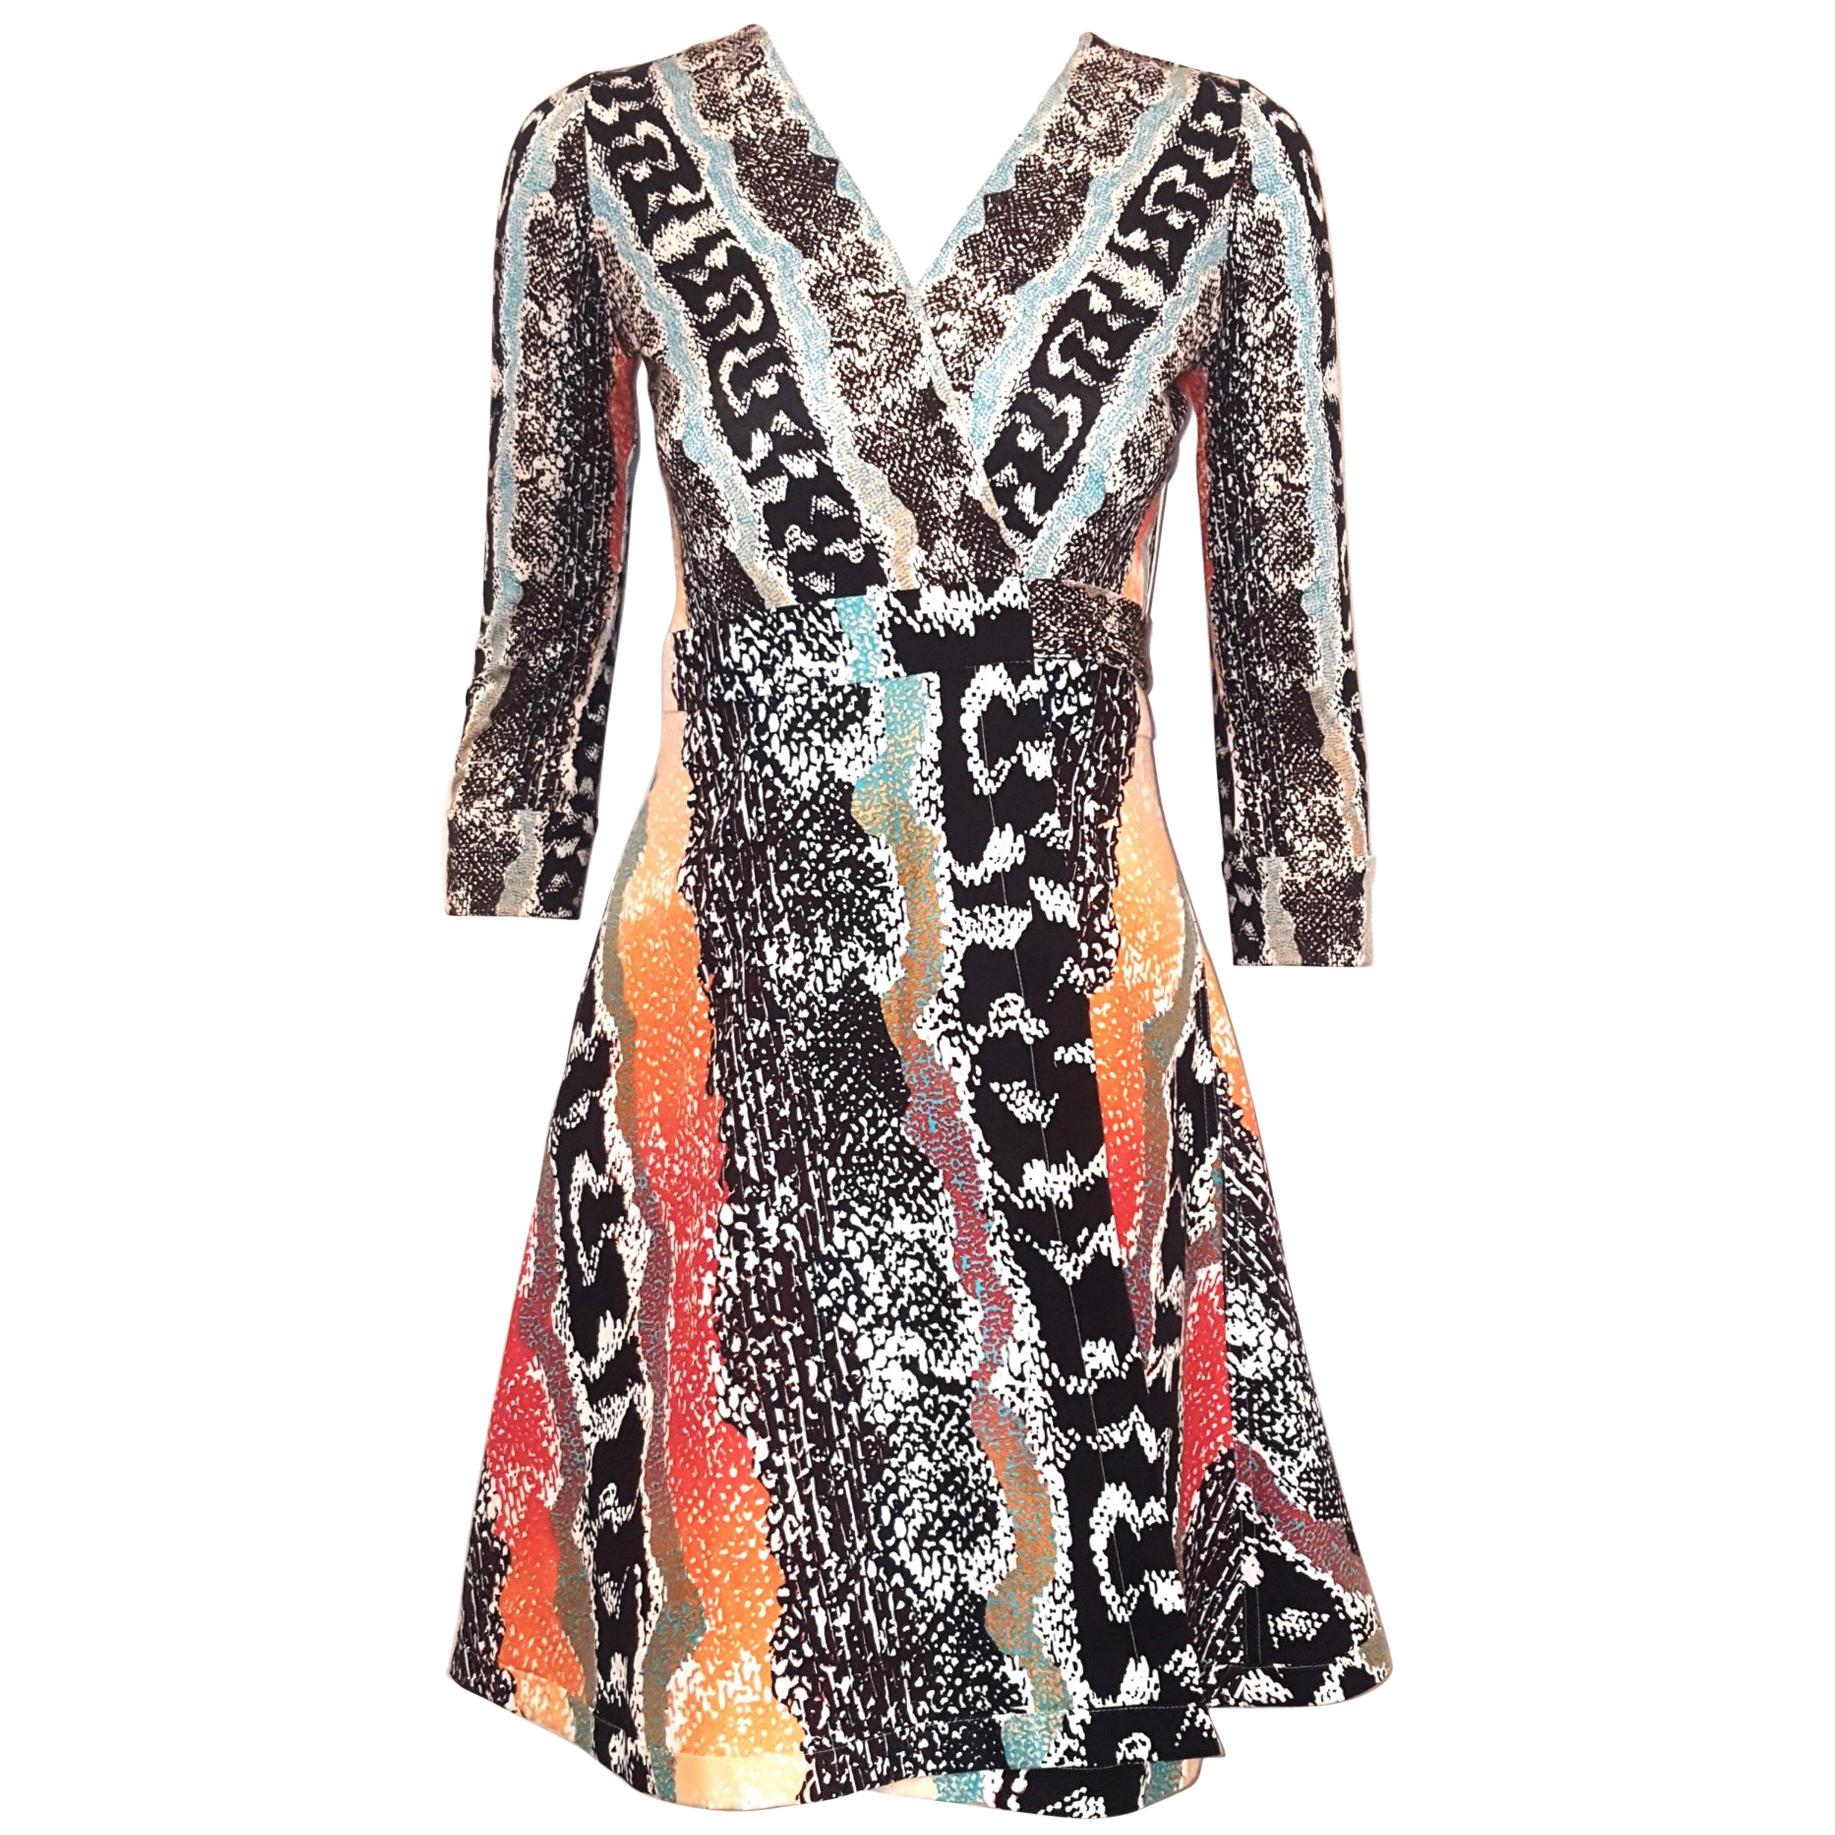 Diane von Furstenberg Classic Wrap Dress Multicolor Print Dress 3/4 Sleeves 